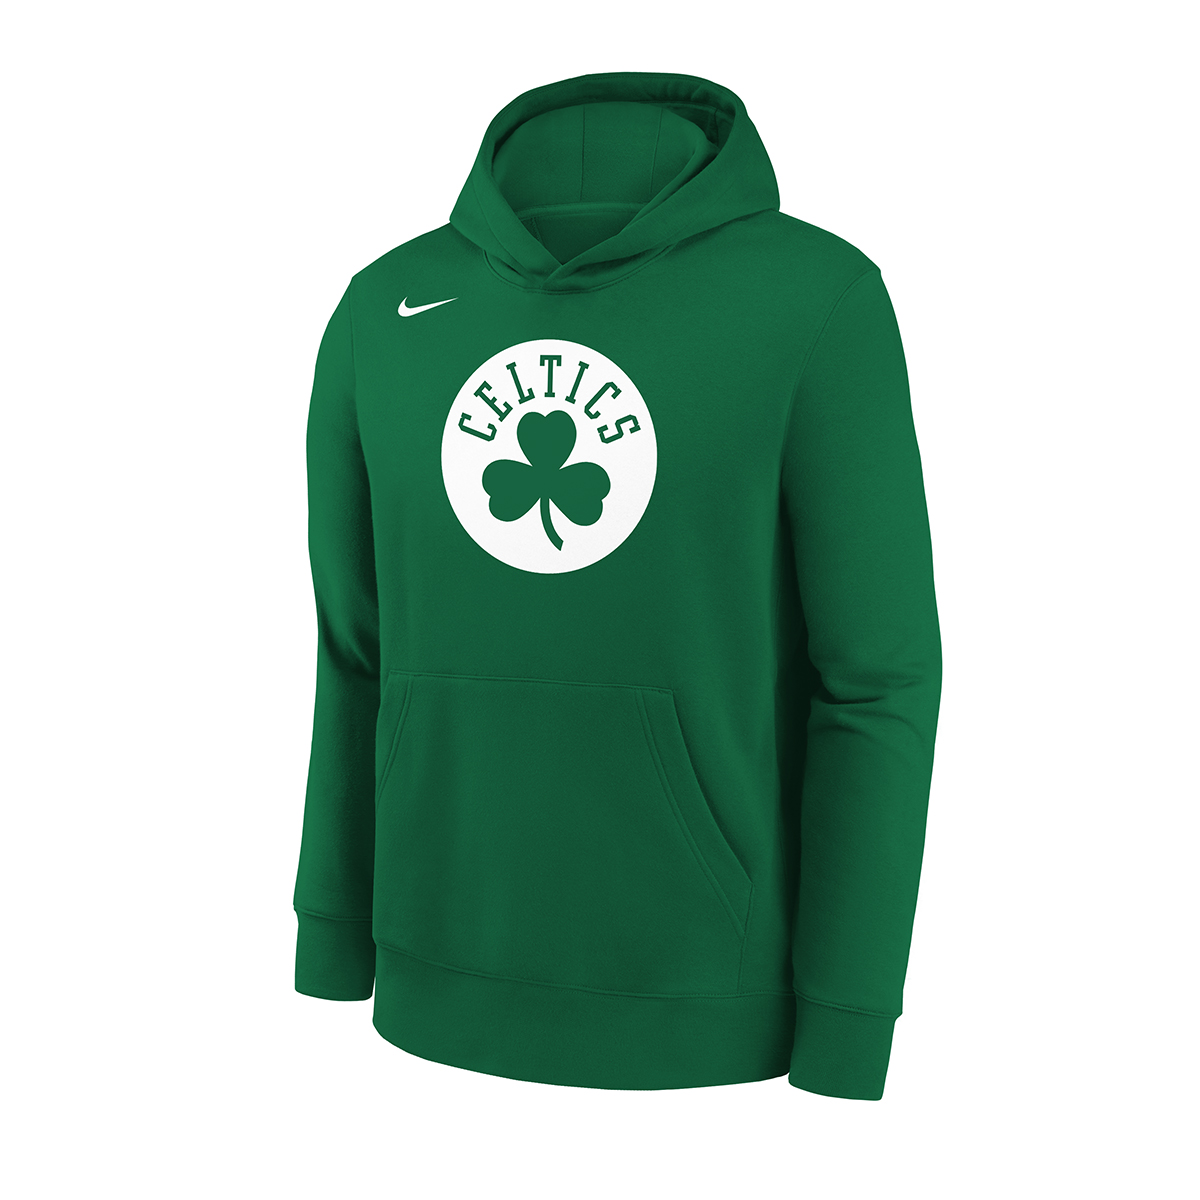 Nike Kids Nba Boston Celtics Essential Fleece Hoody Kids, Clover